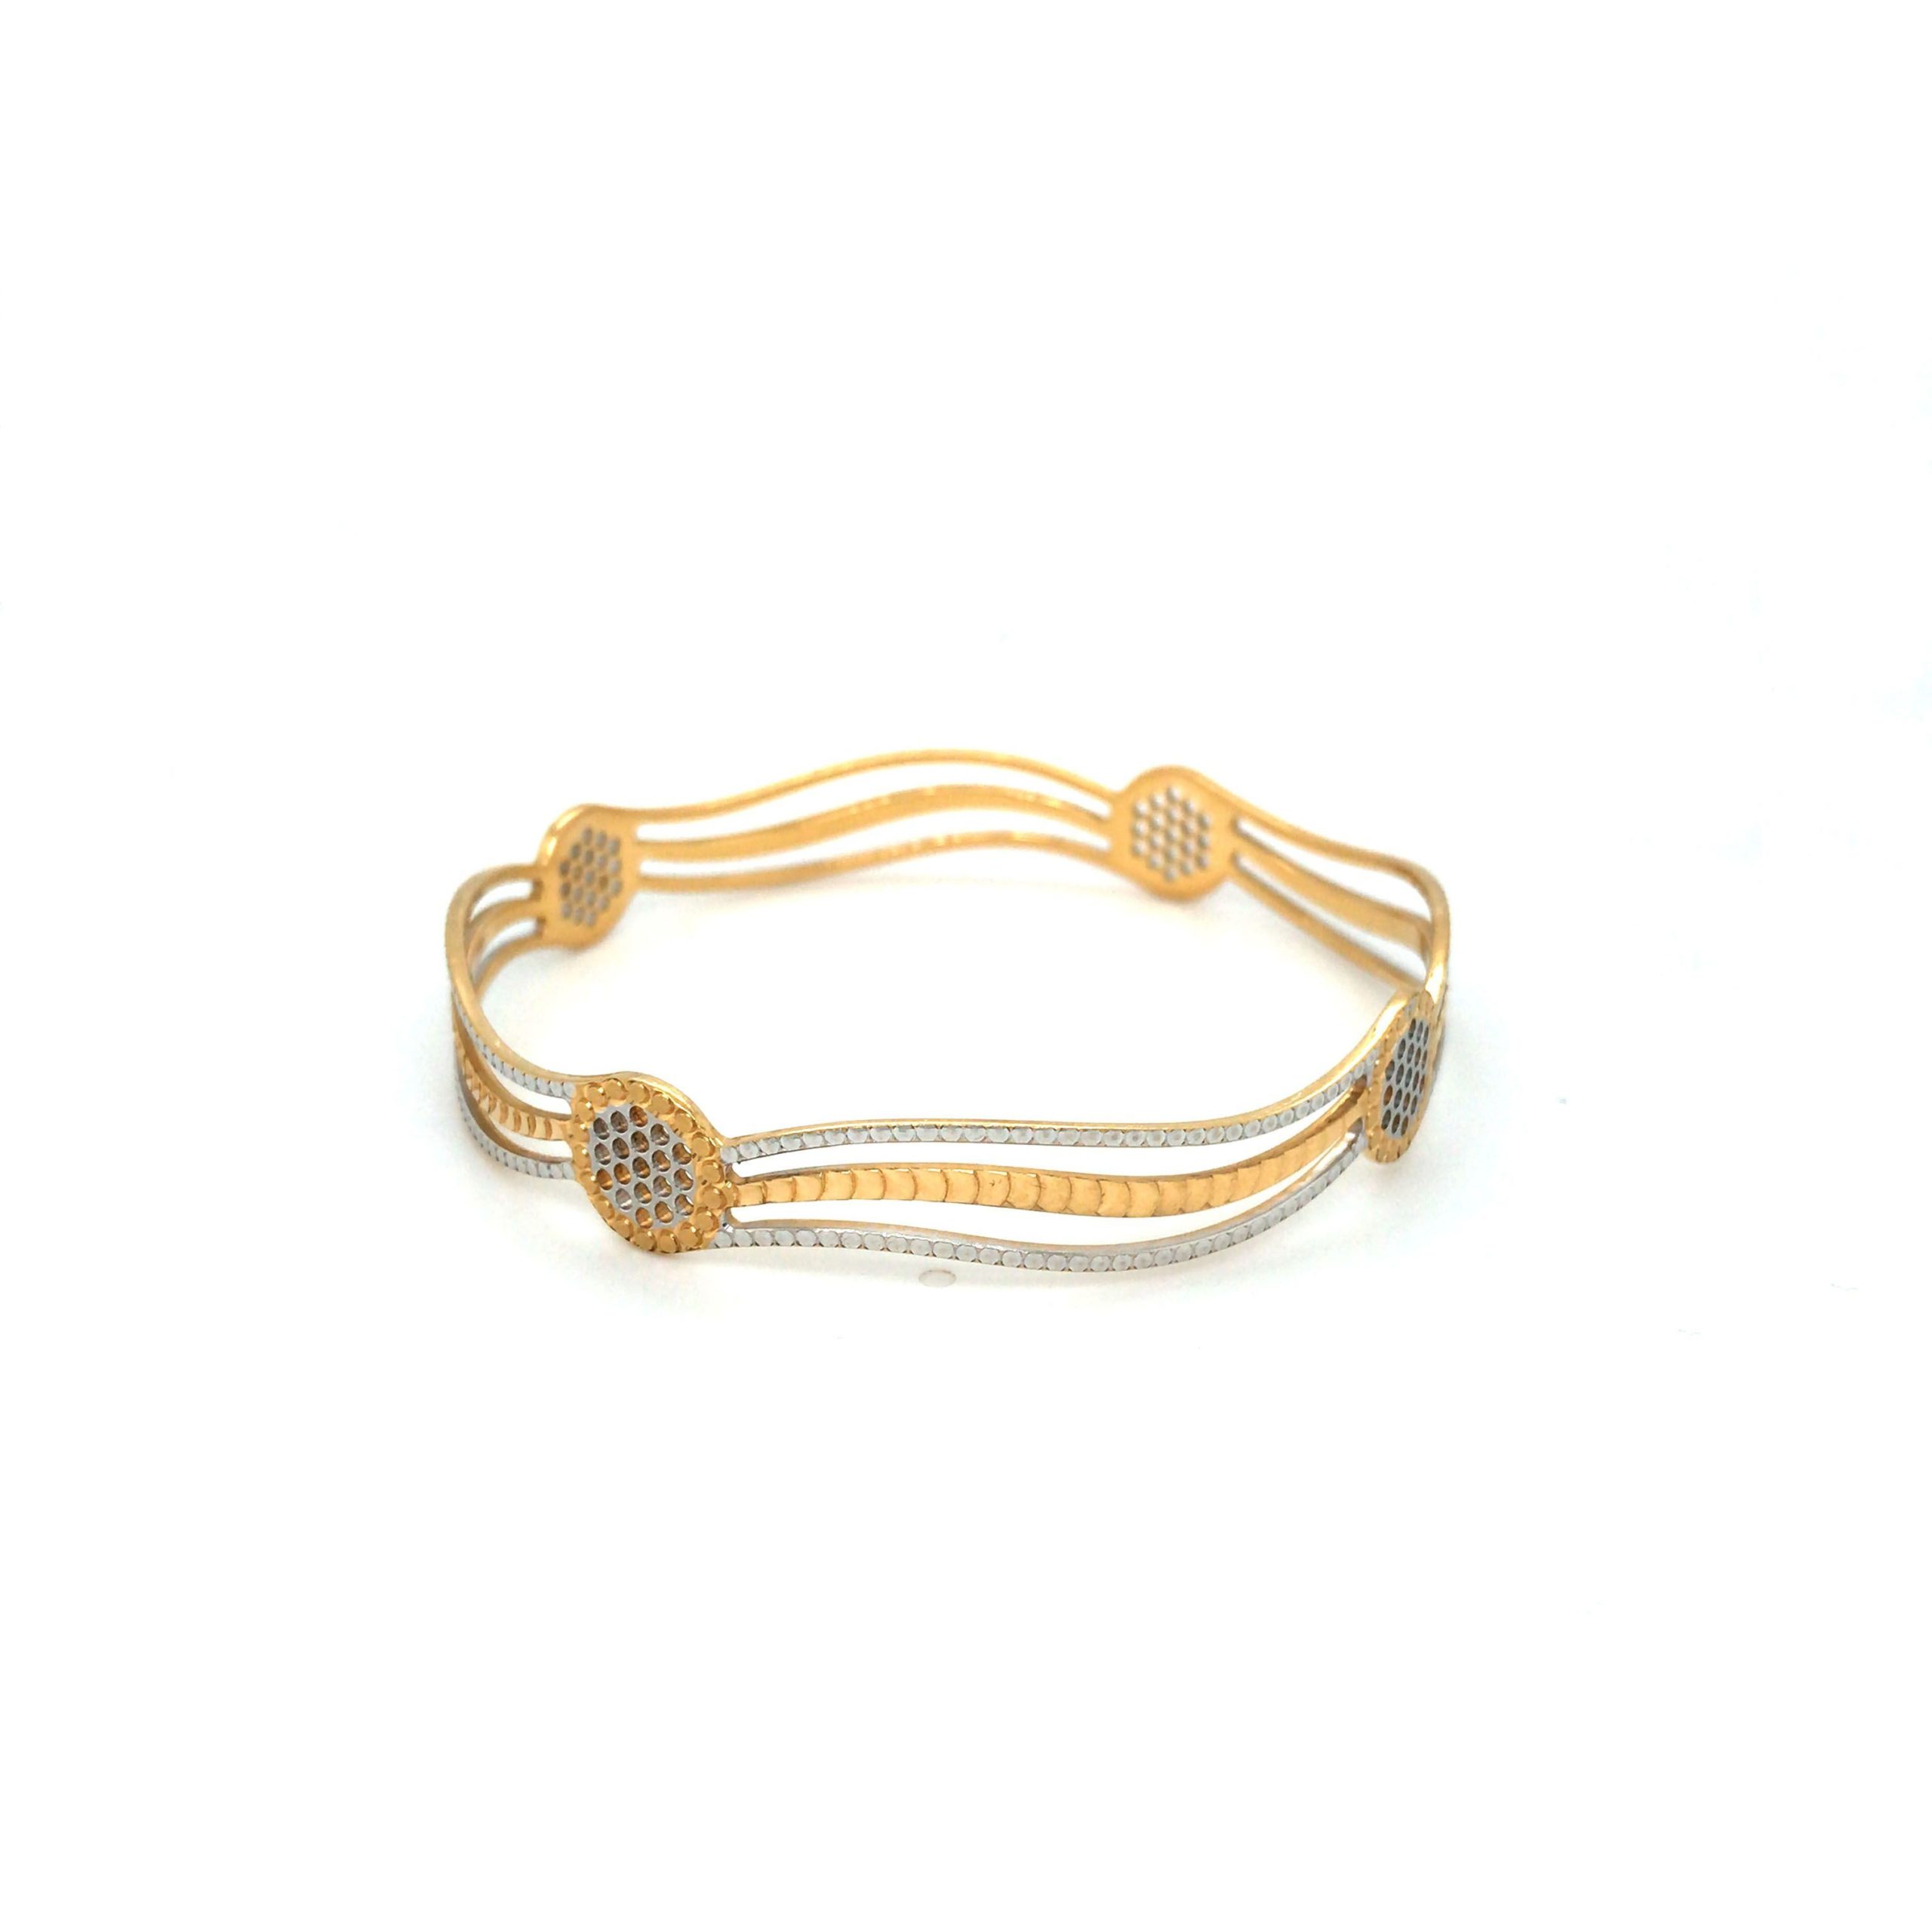 22K Gold Bracelet for Women with Cz - 235-GBR2818 in 16.650 Grams